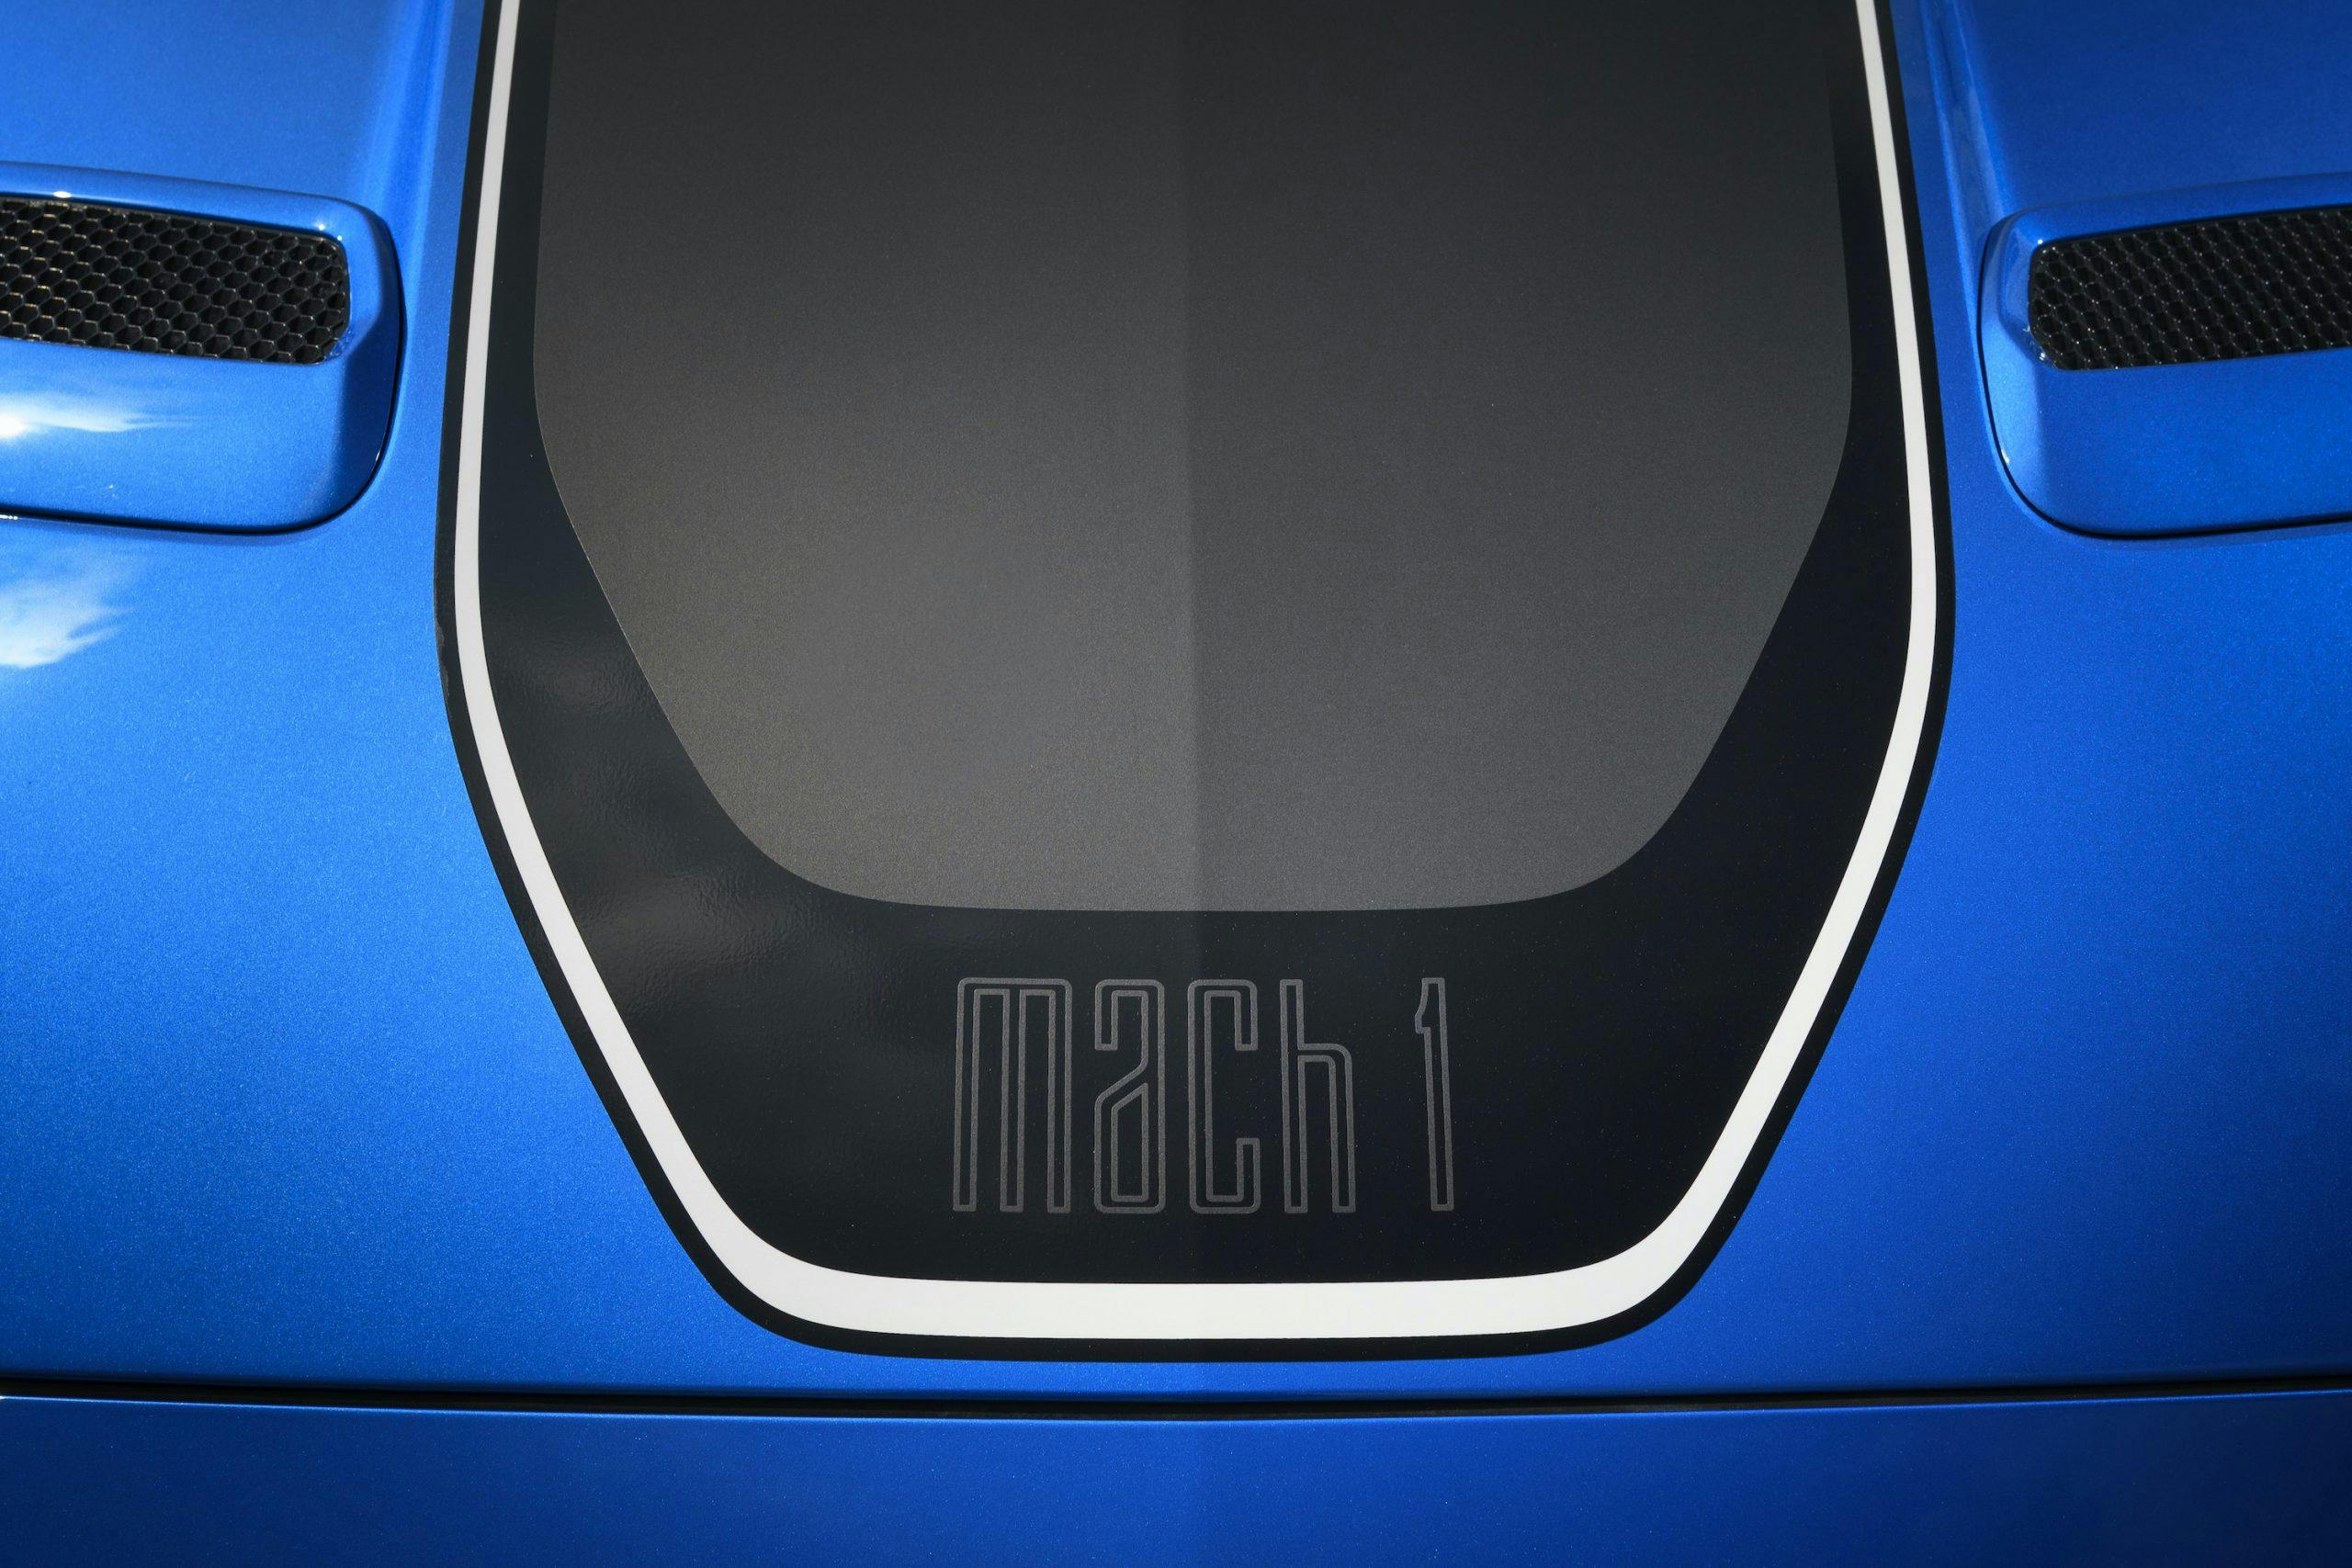 2021 Ford Mustang Mach 1 emblem detail